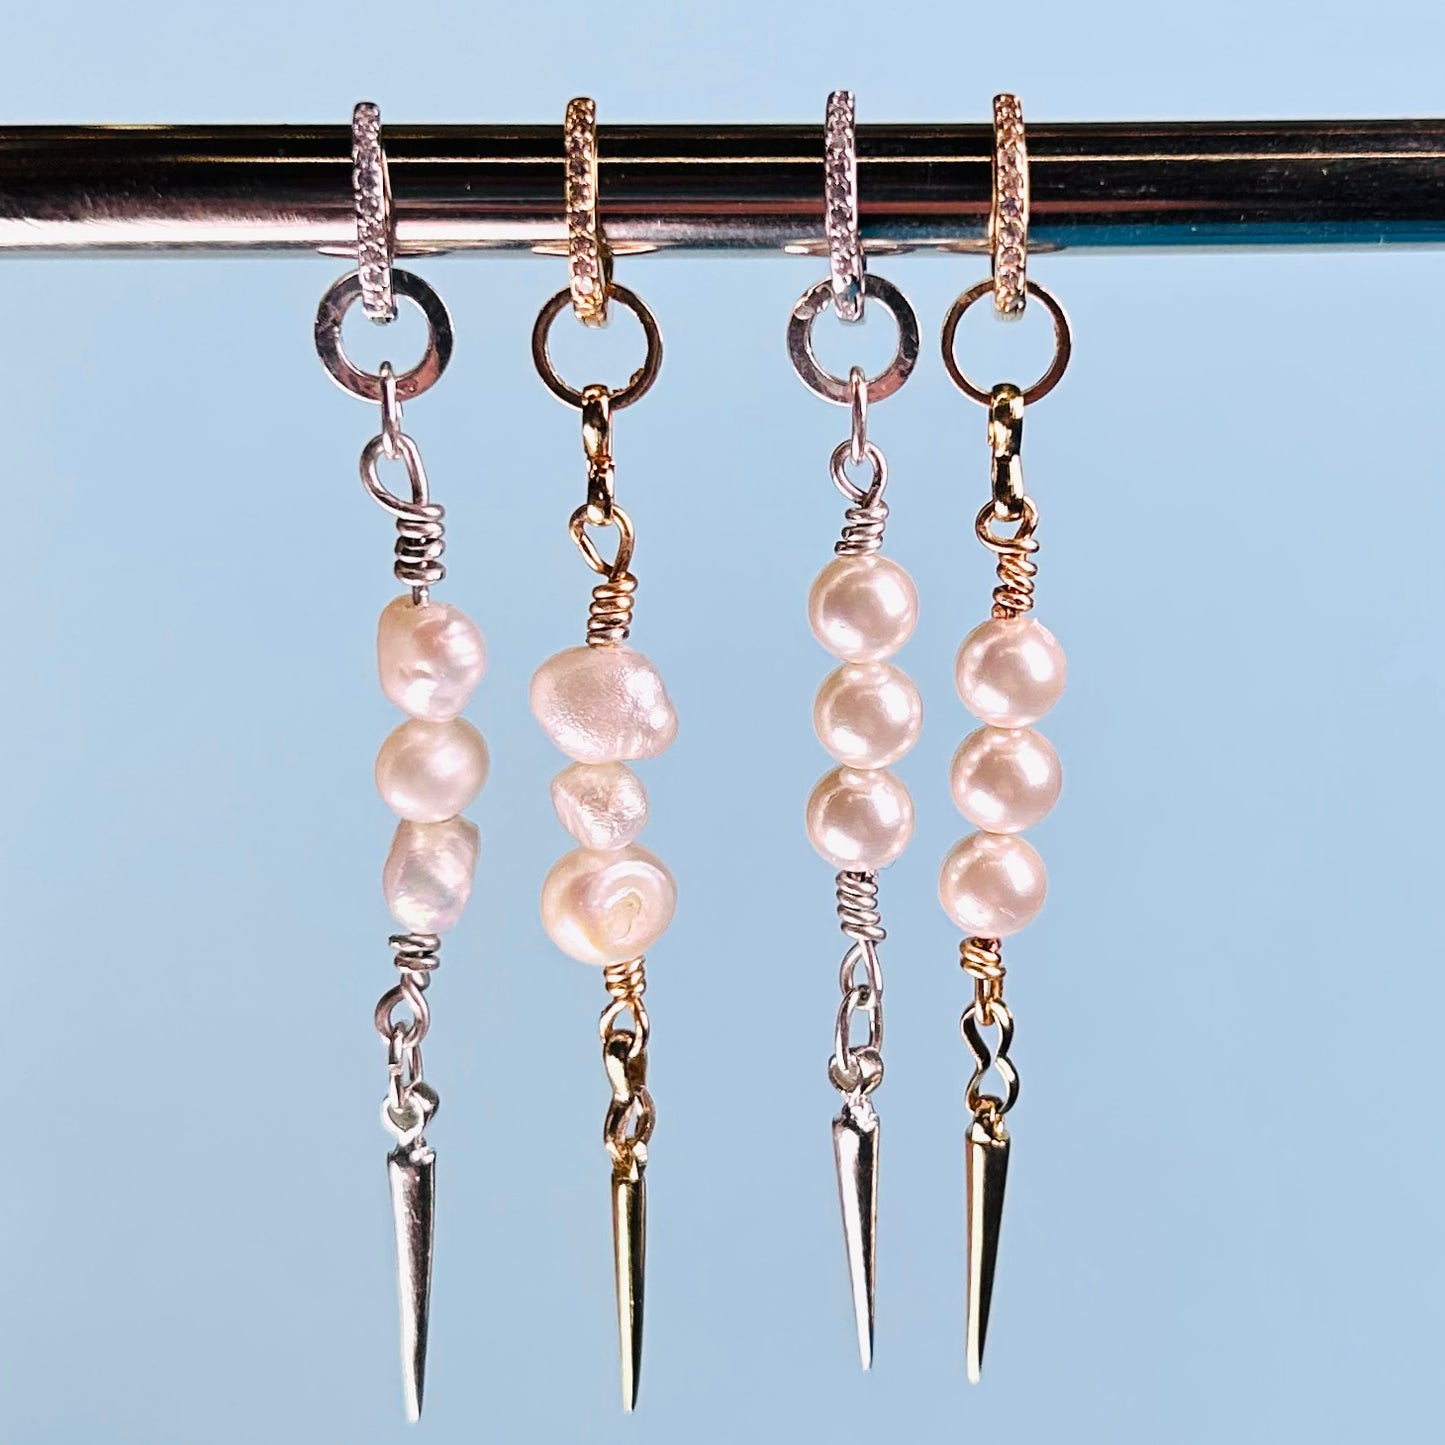 2.0 Pearl earrings with 3 pearls